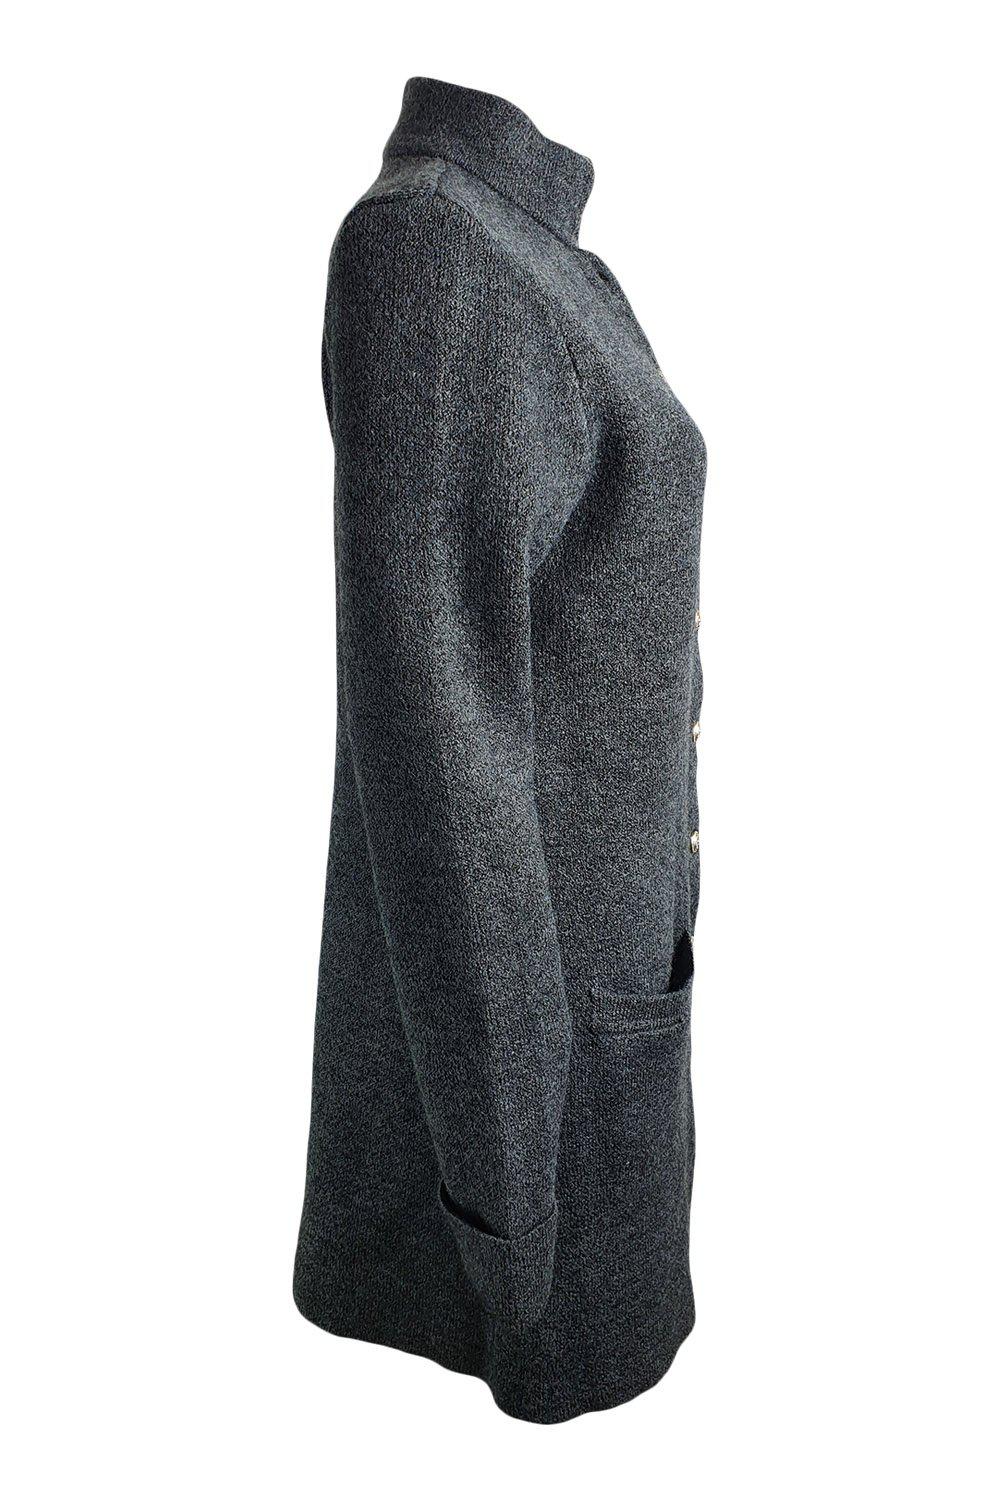 ADRIENNE VITTADINI Grey Knitted Wool Blend Funnel Neck Cardi Coat (M)-Adrienne Vittadini-The Freperie